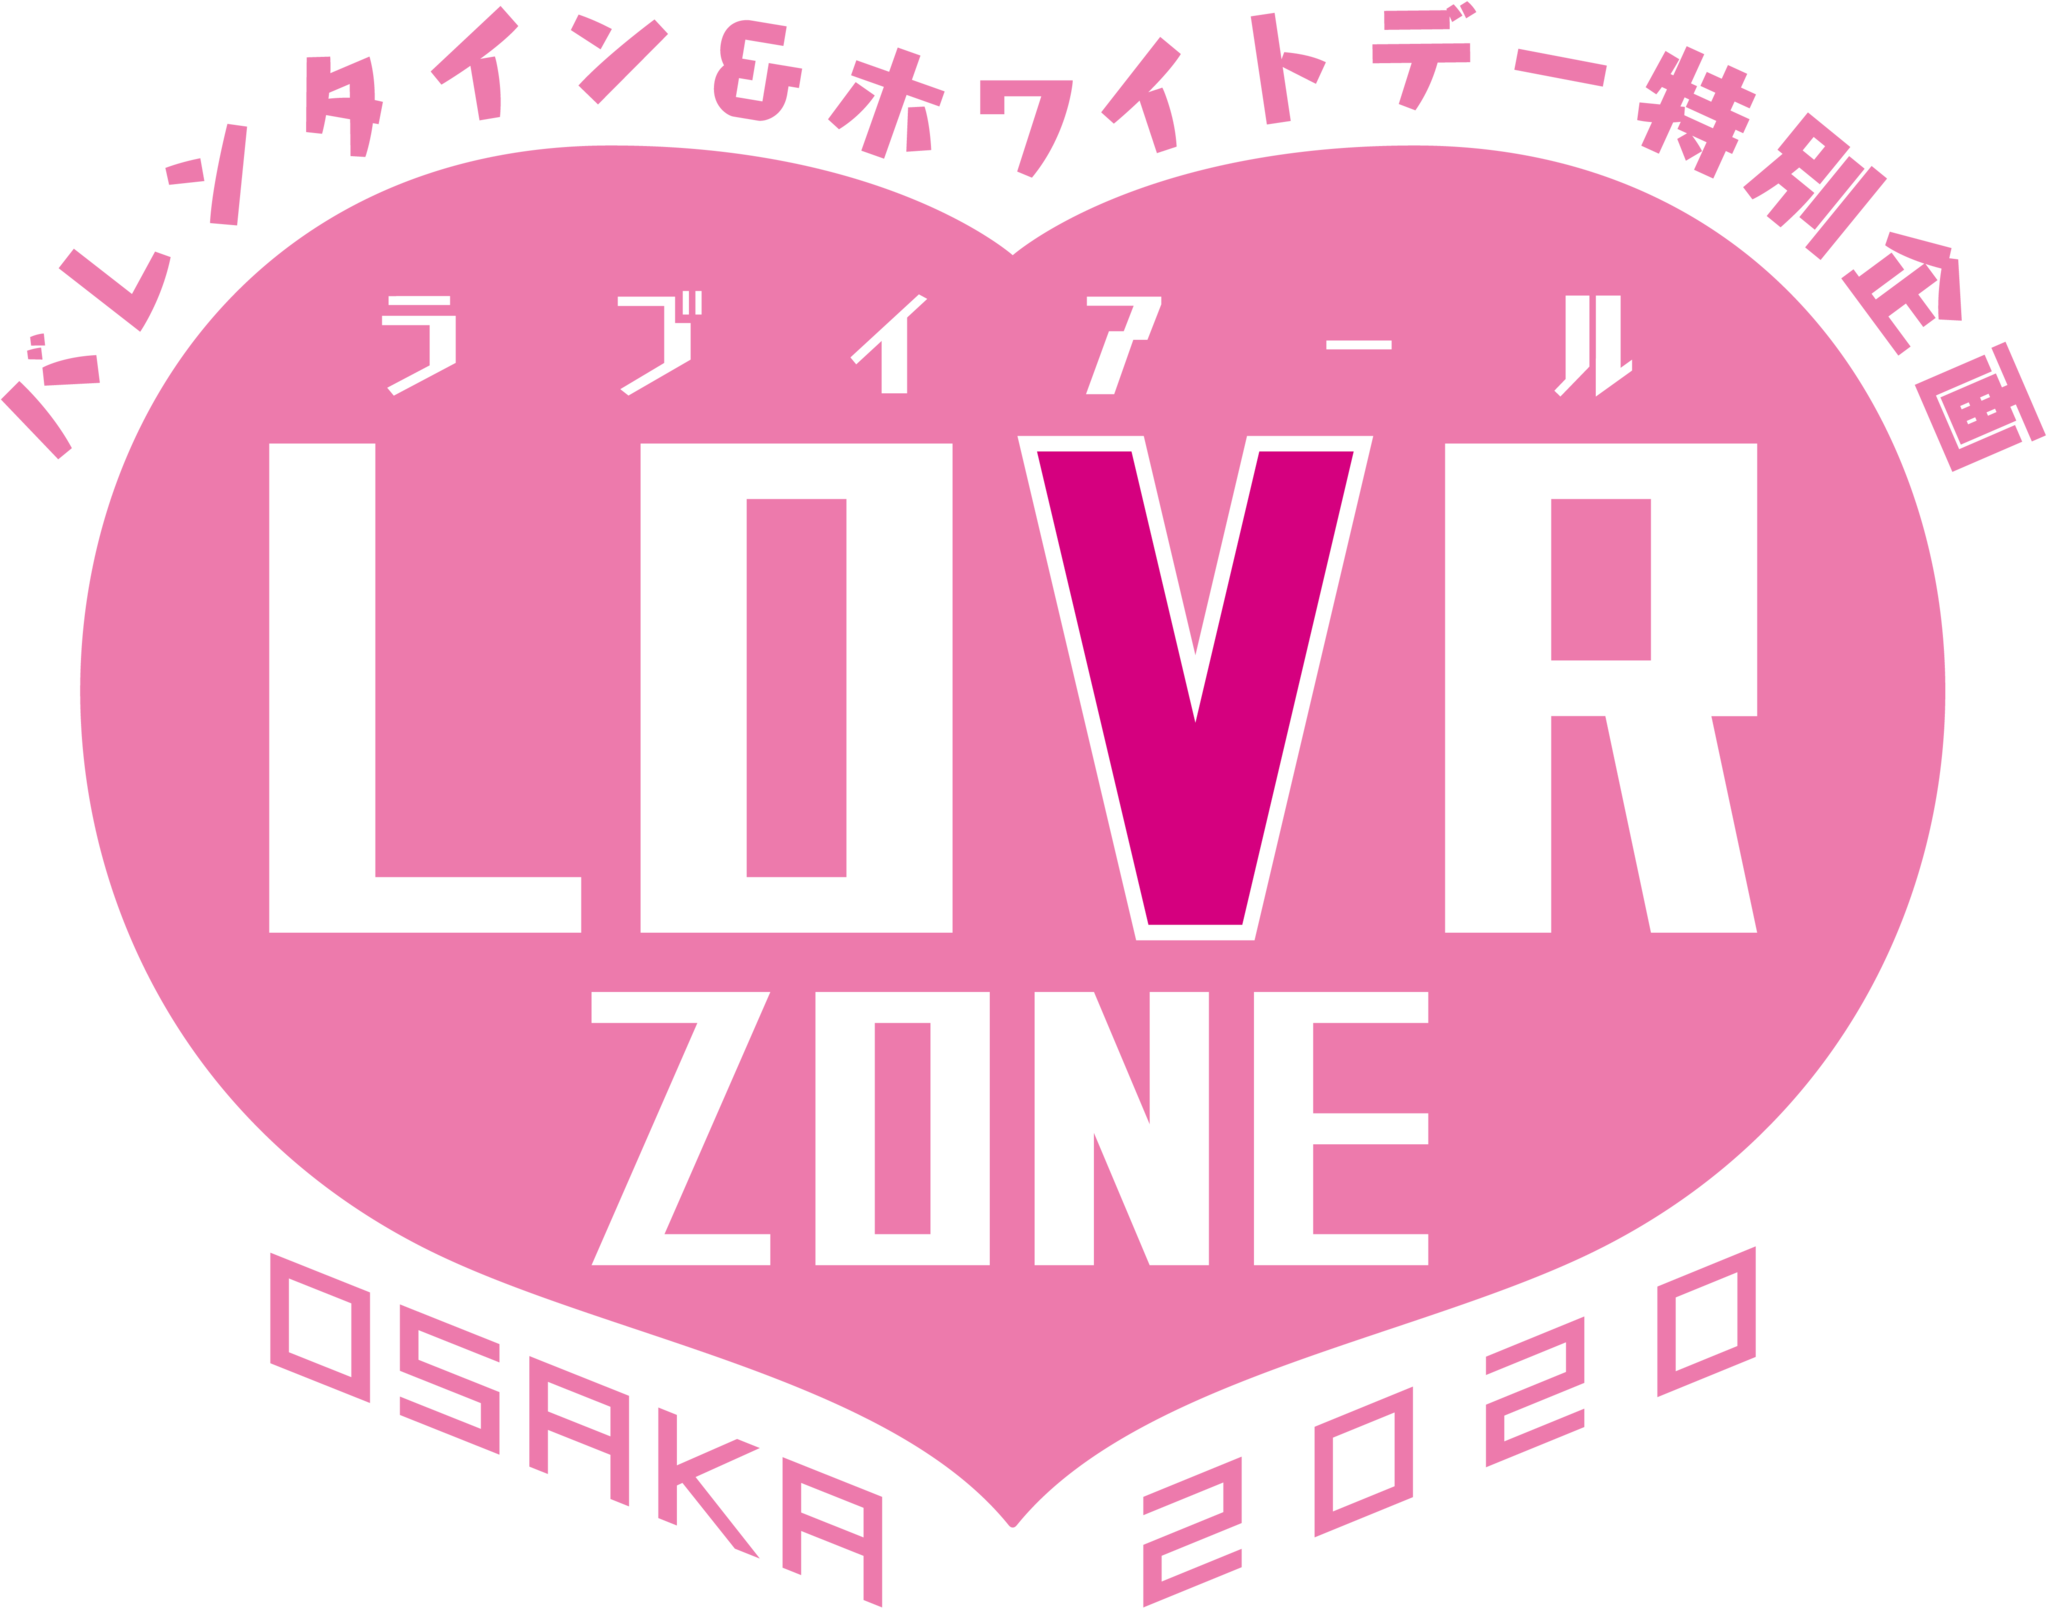 Vr Zone Osaka がバレンタイン ホワイトデー特別企画を開催 Lovr Zone Osaka ラブイアール ゾーン オオサカ で愛を叫ぼう オリジナルチョコもプレゼント バンダイナムコアミューズメントのプレスリリース